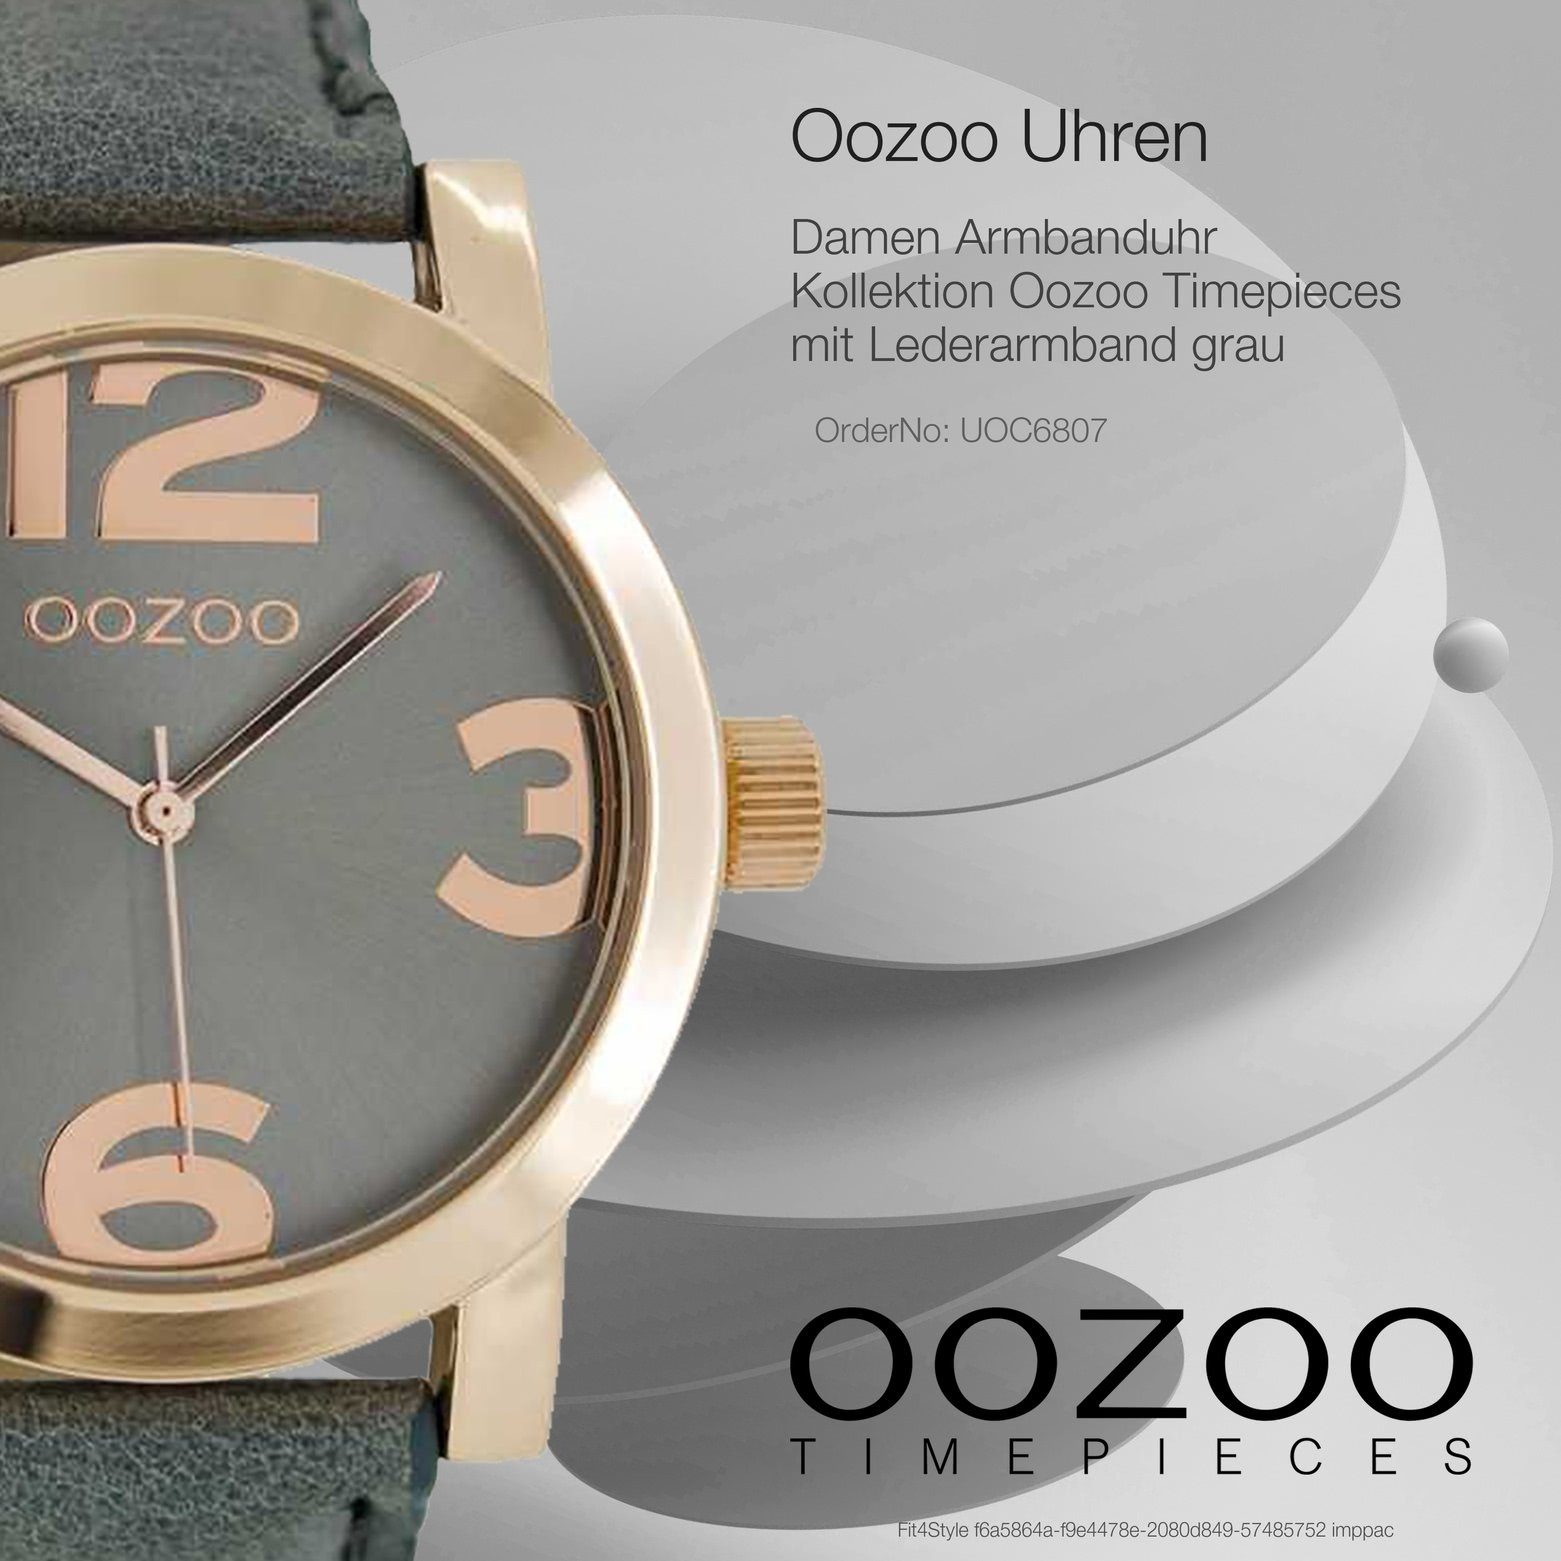 groß rosegold, Damen Damenuhr Oozoo rund, Fashion-Style Lederarmband, OOZOO 40mm) Quarzuhr Armbanduhr (ca.